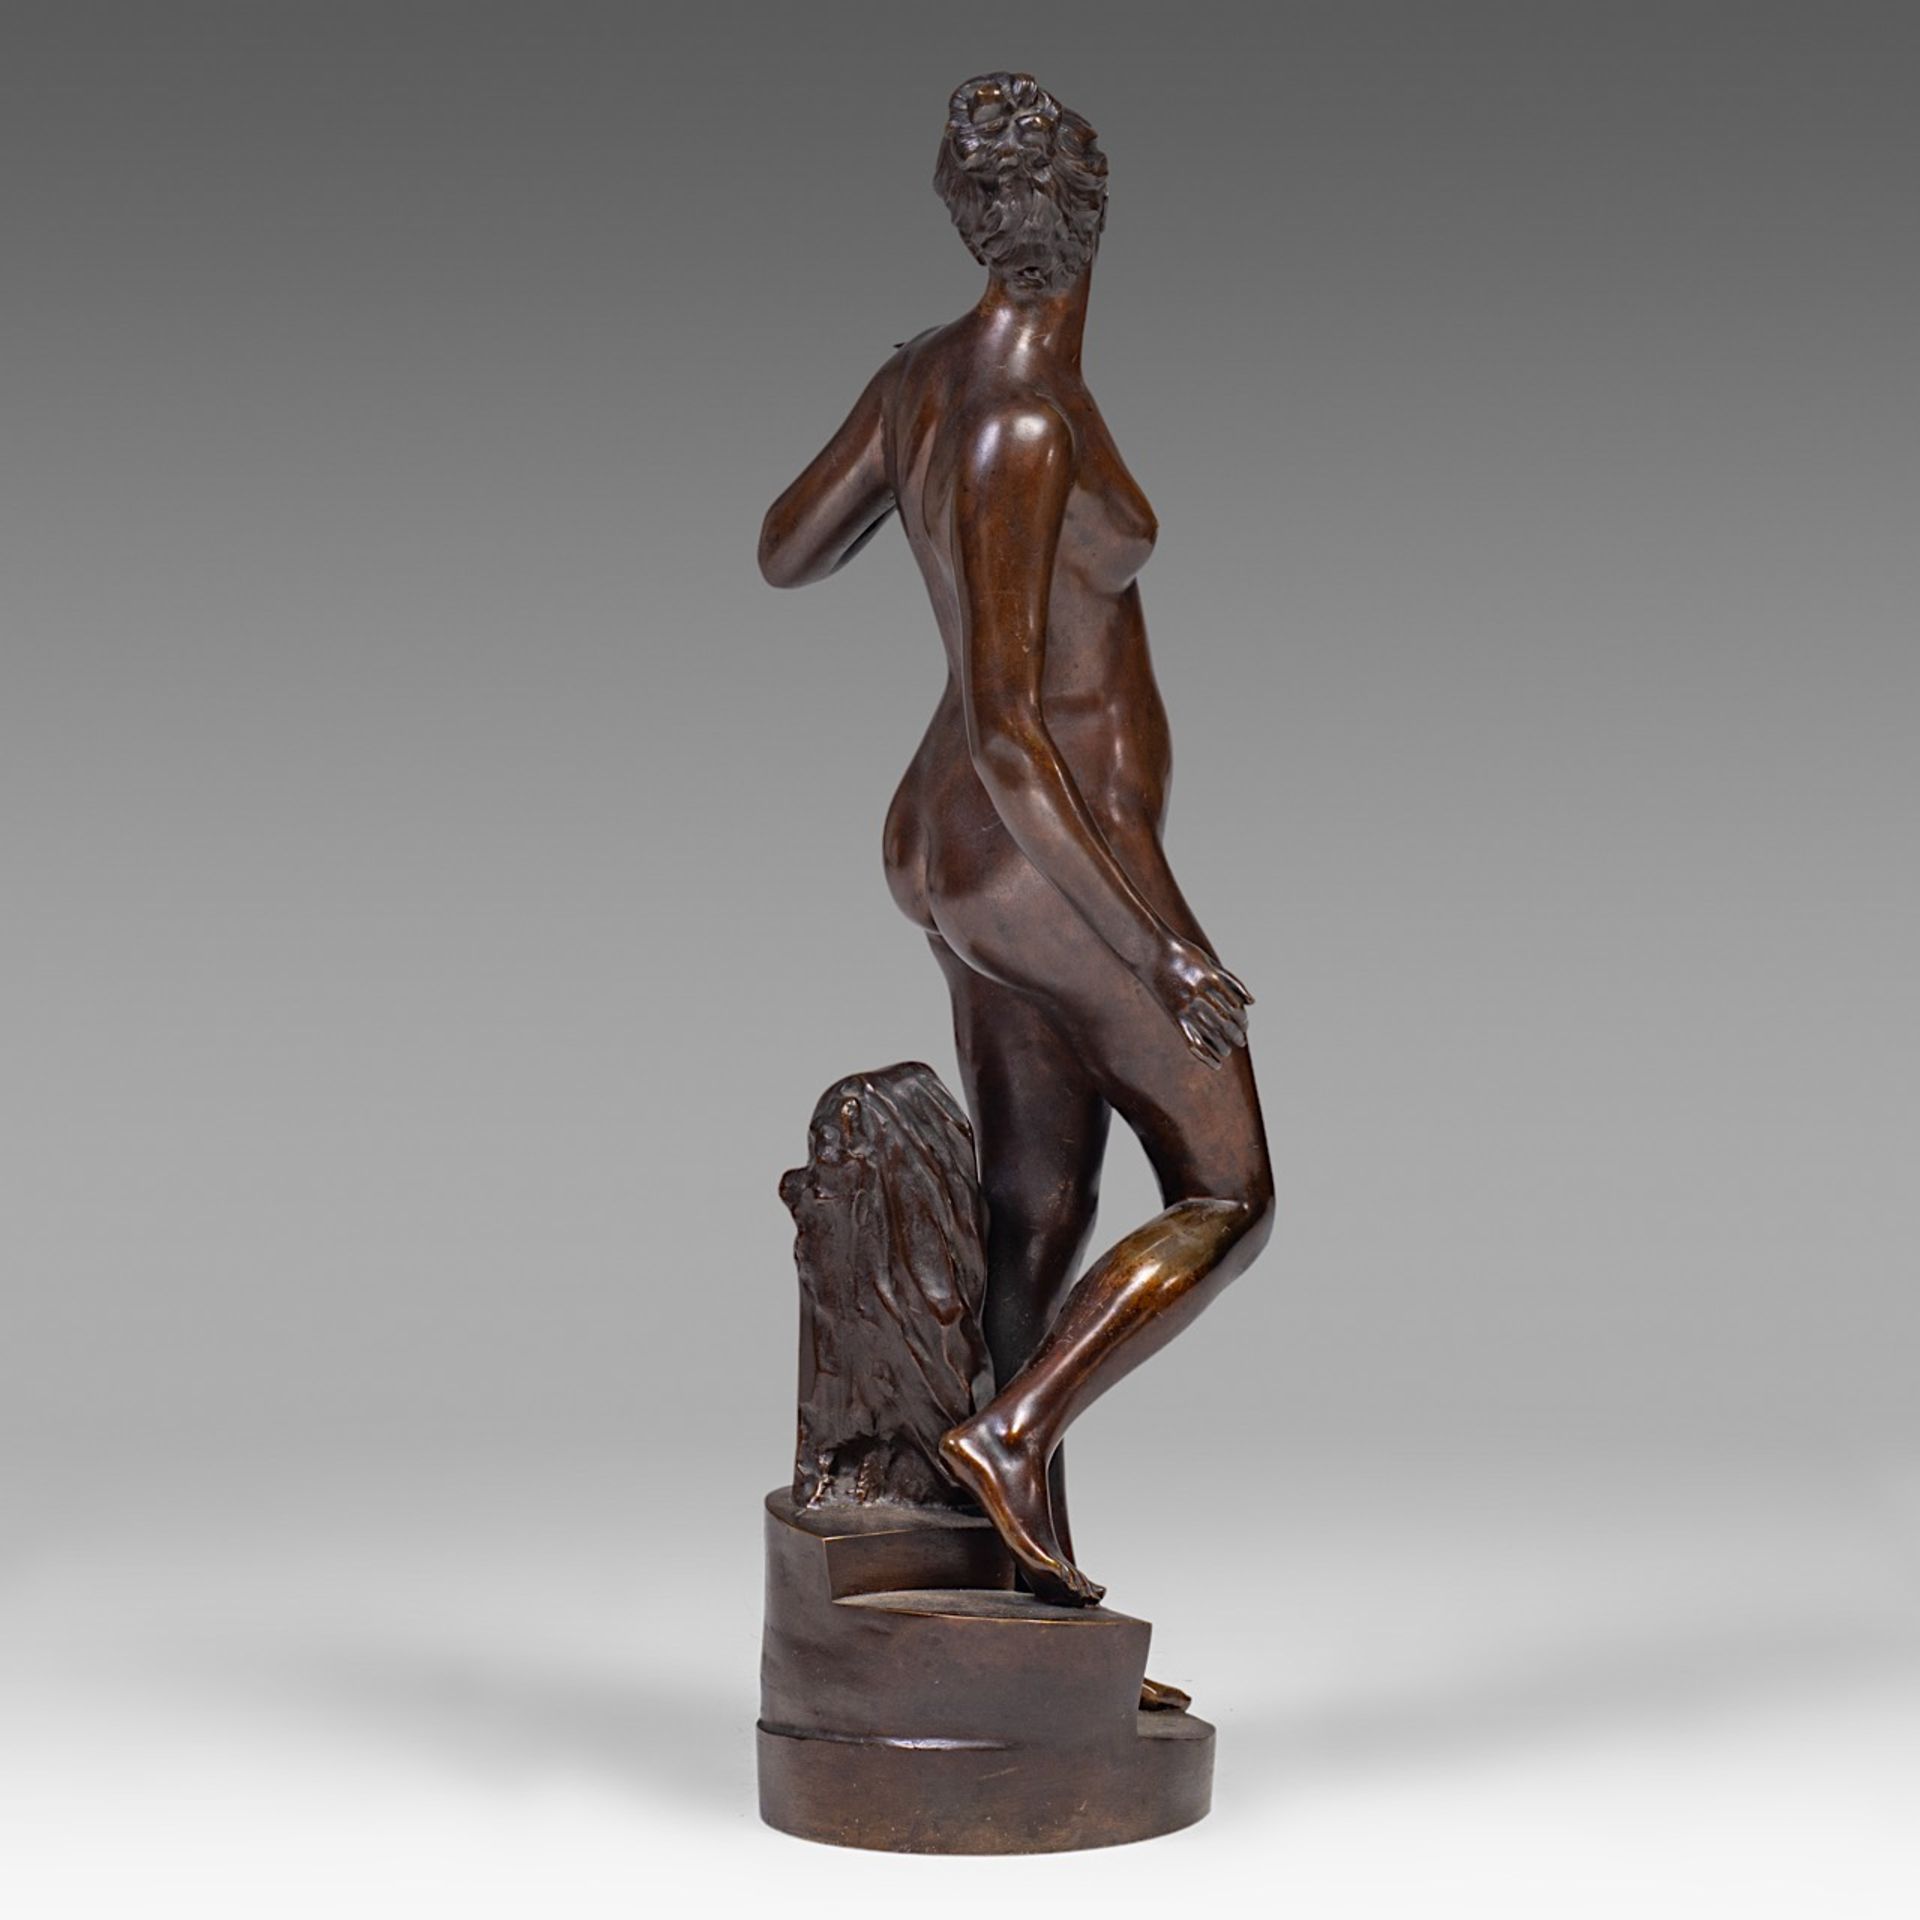 Signed 'Telemaque', Venus with bird, patinated bronze, H 75 cm - Image 5 of 10